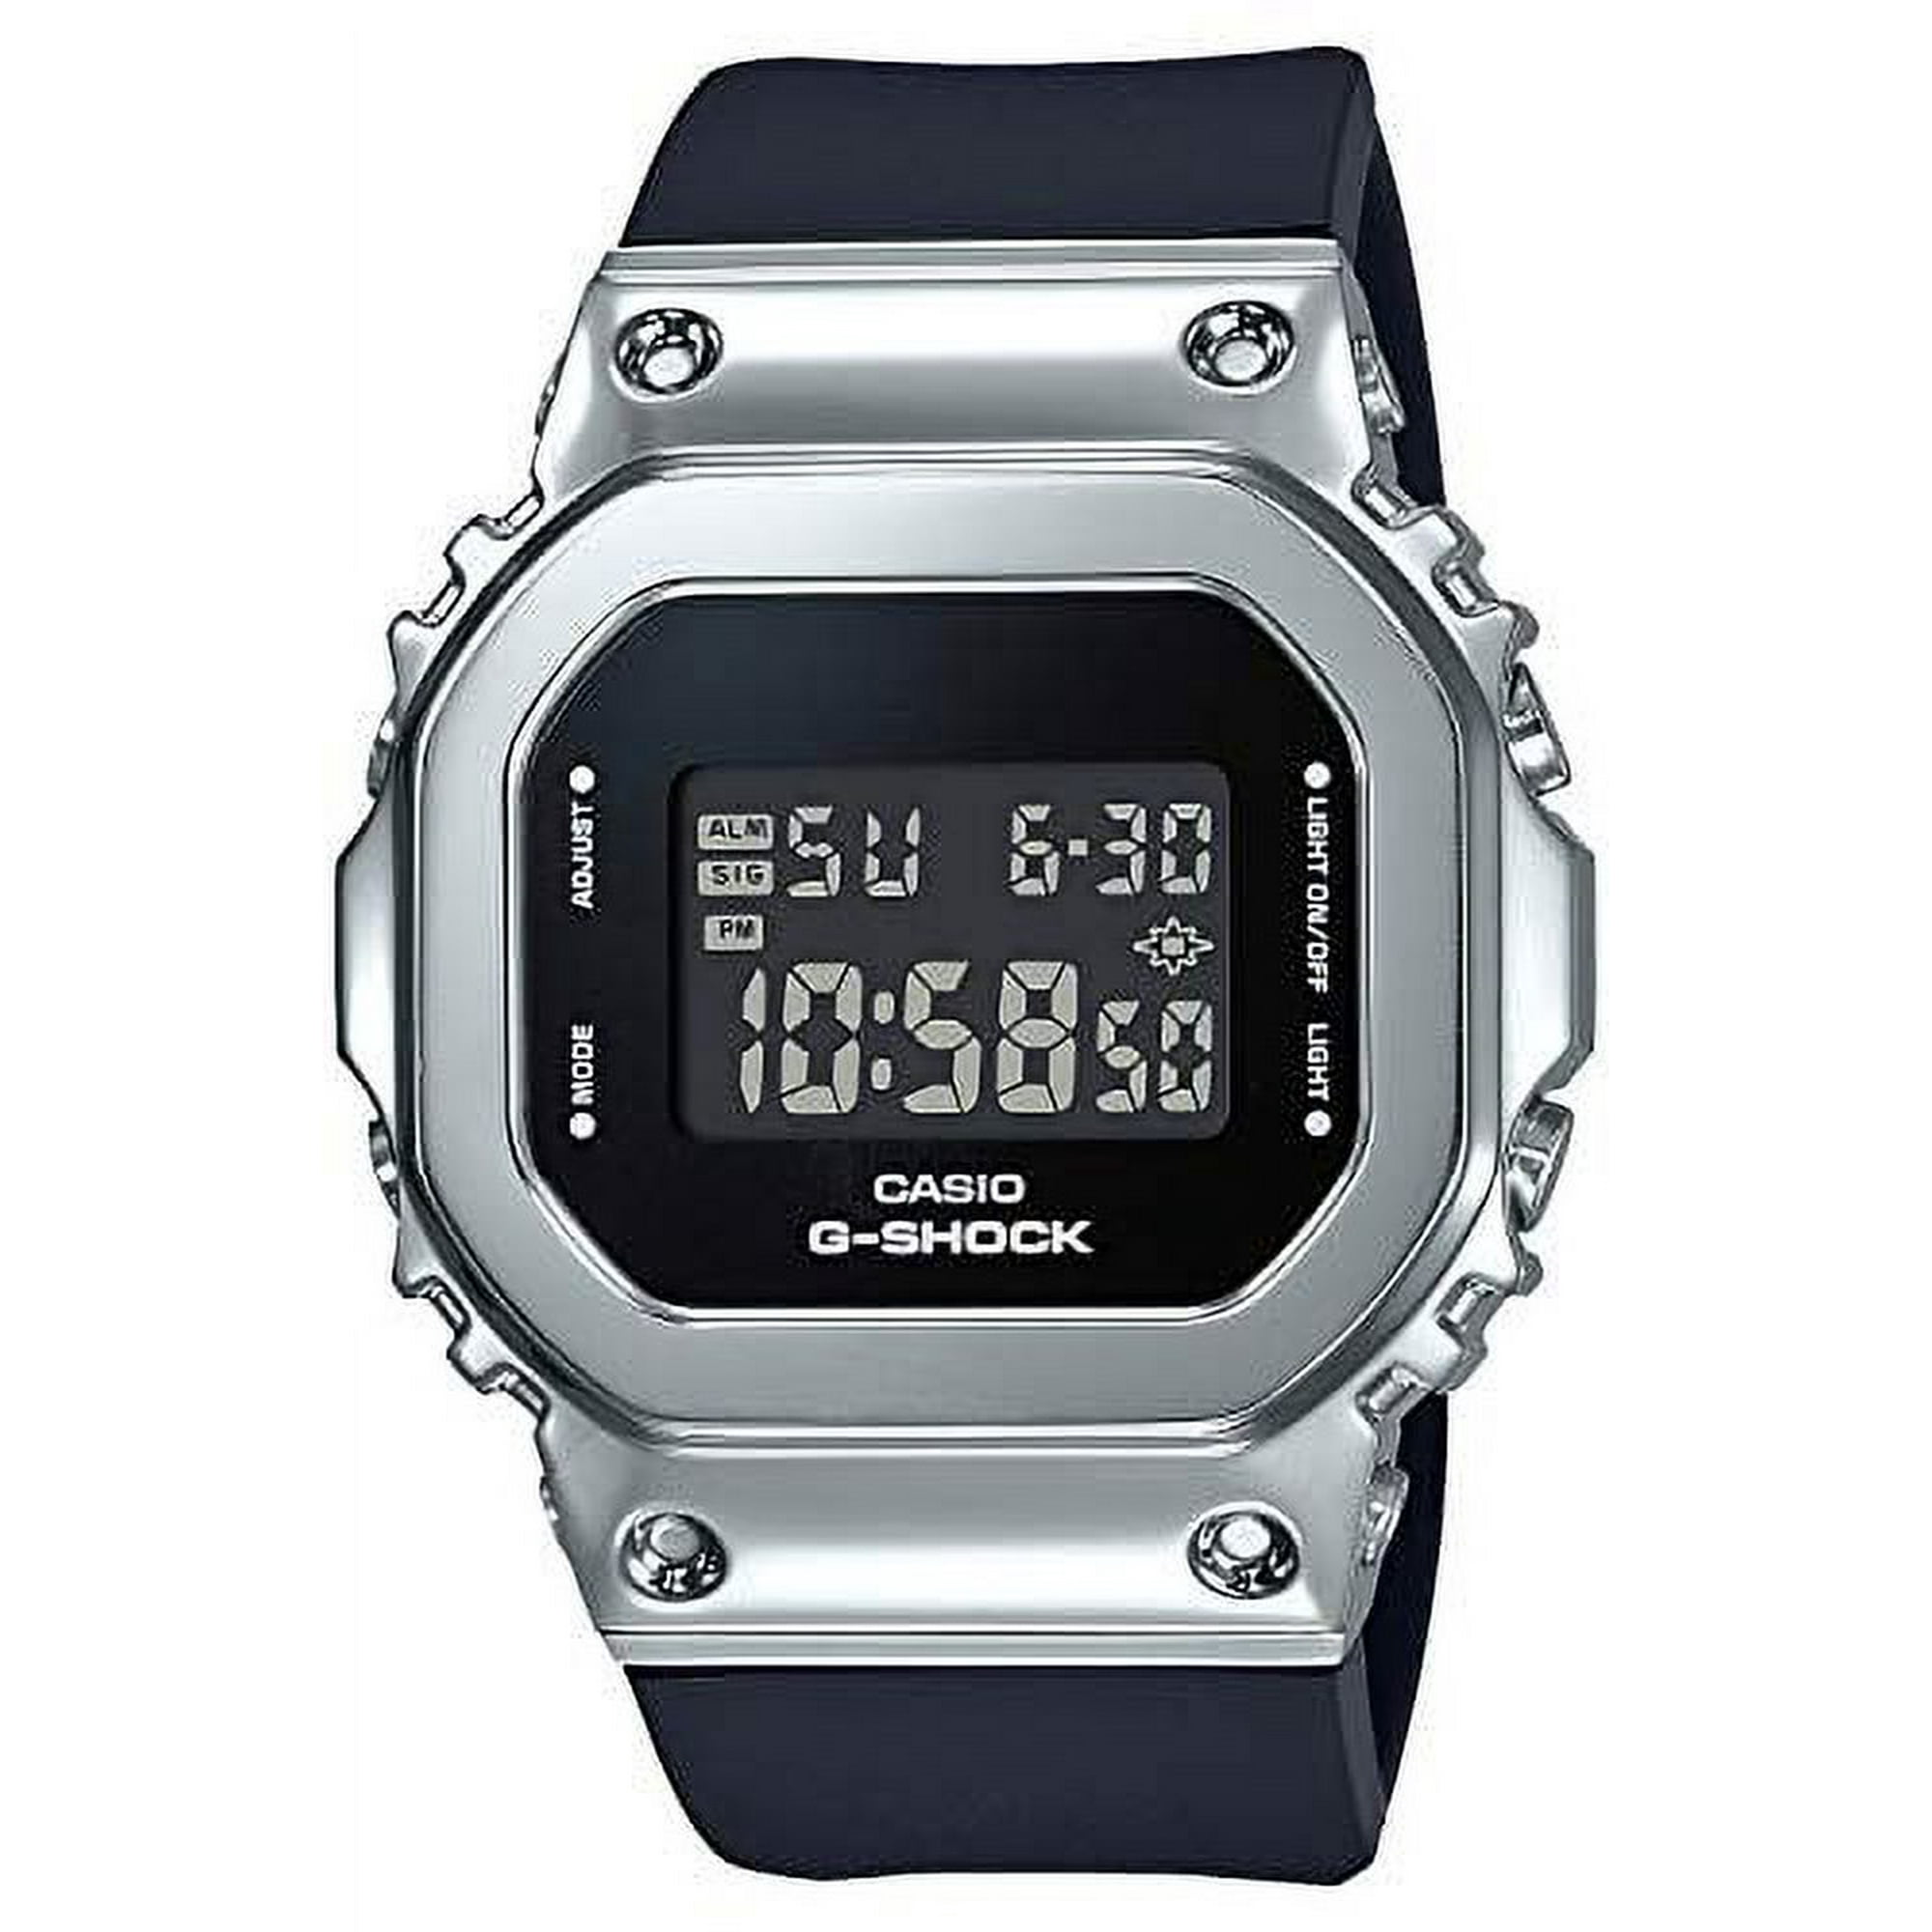 Casio] Watches G-SHOCK Mid size model GM-S5600-1JF black - Walmart.com